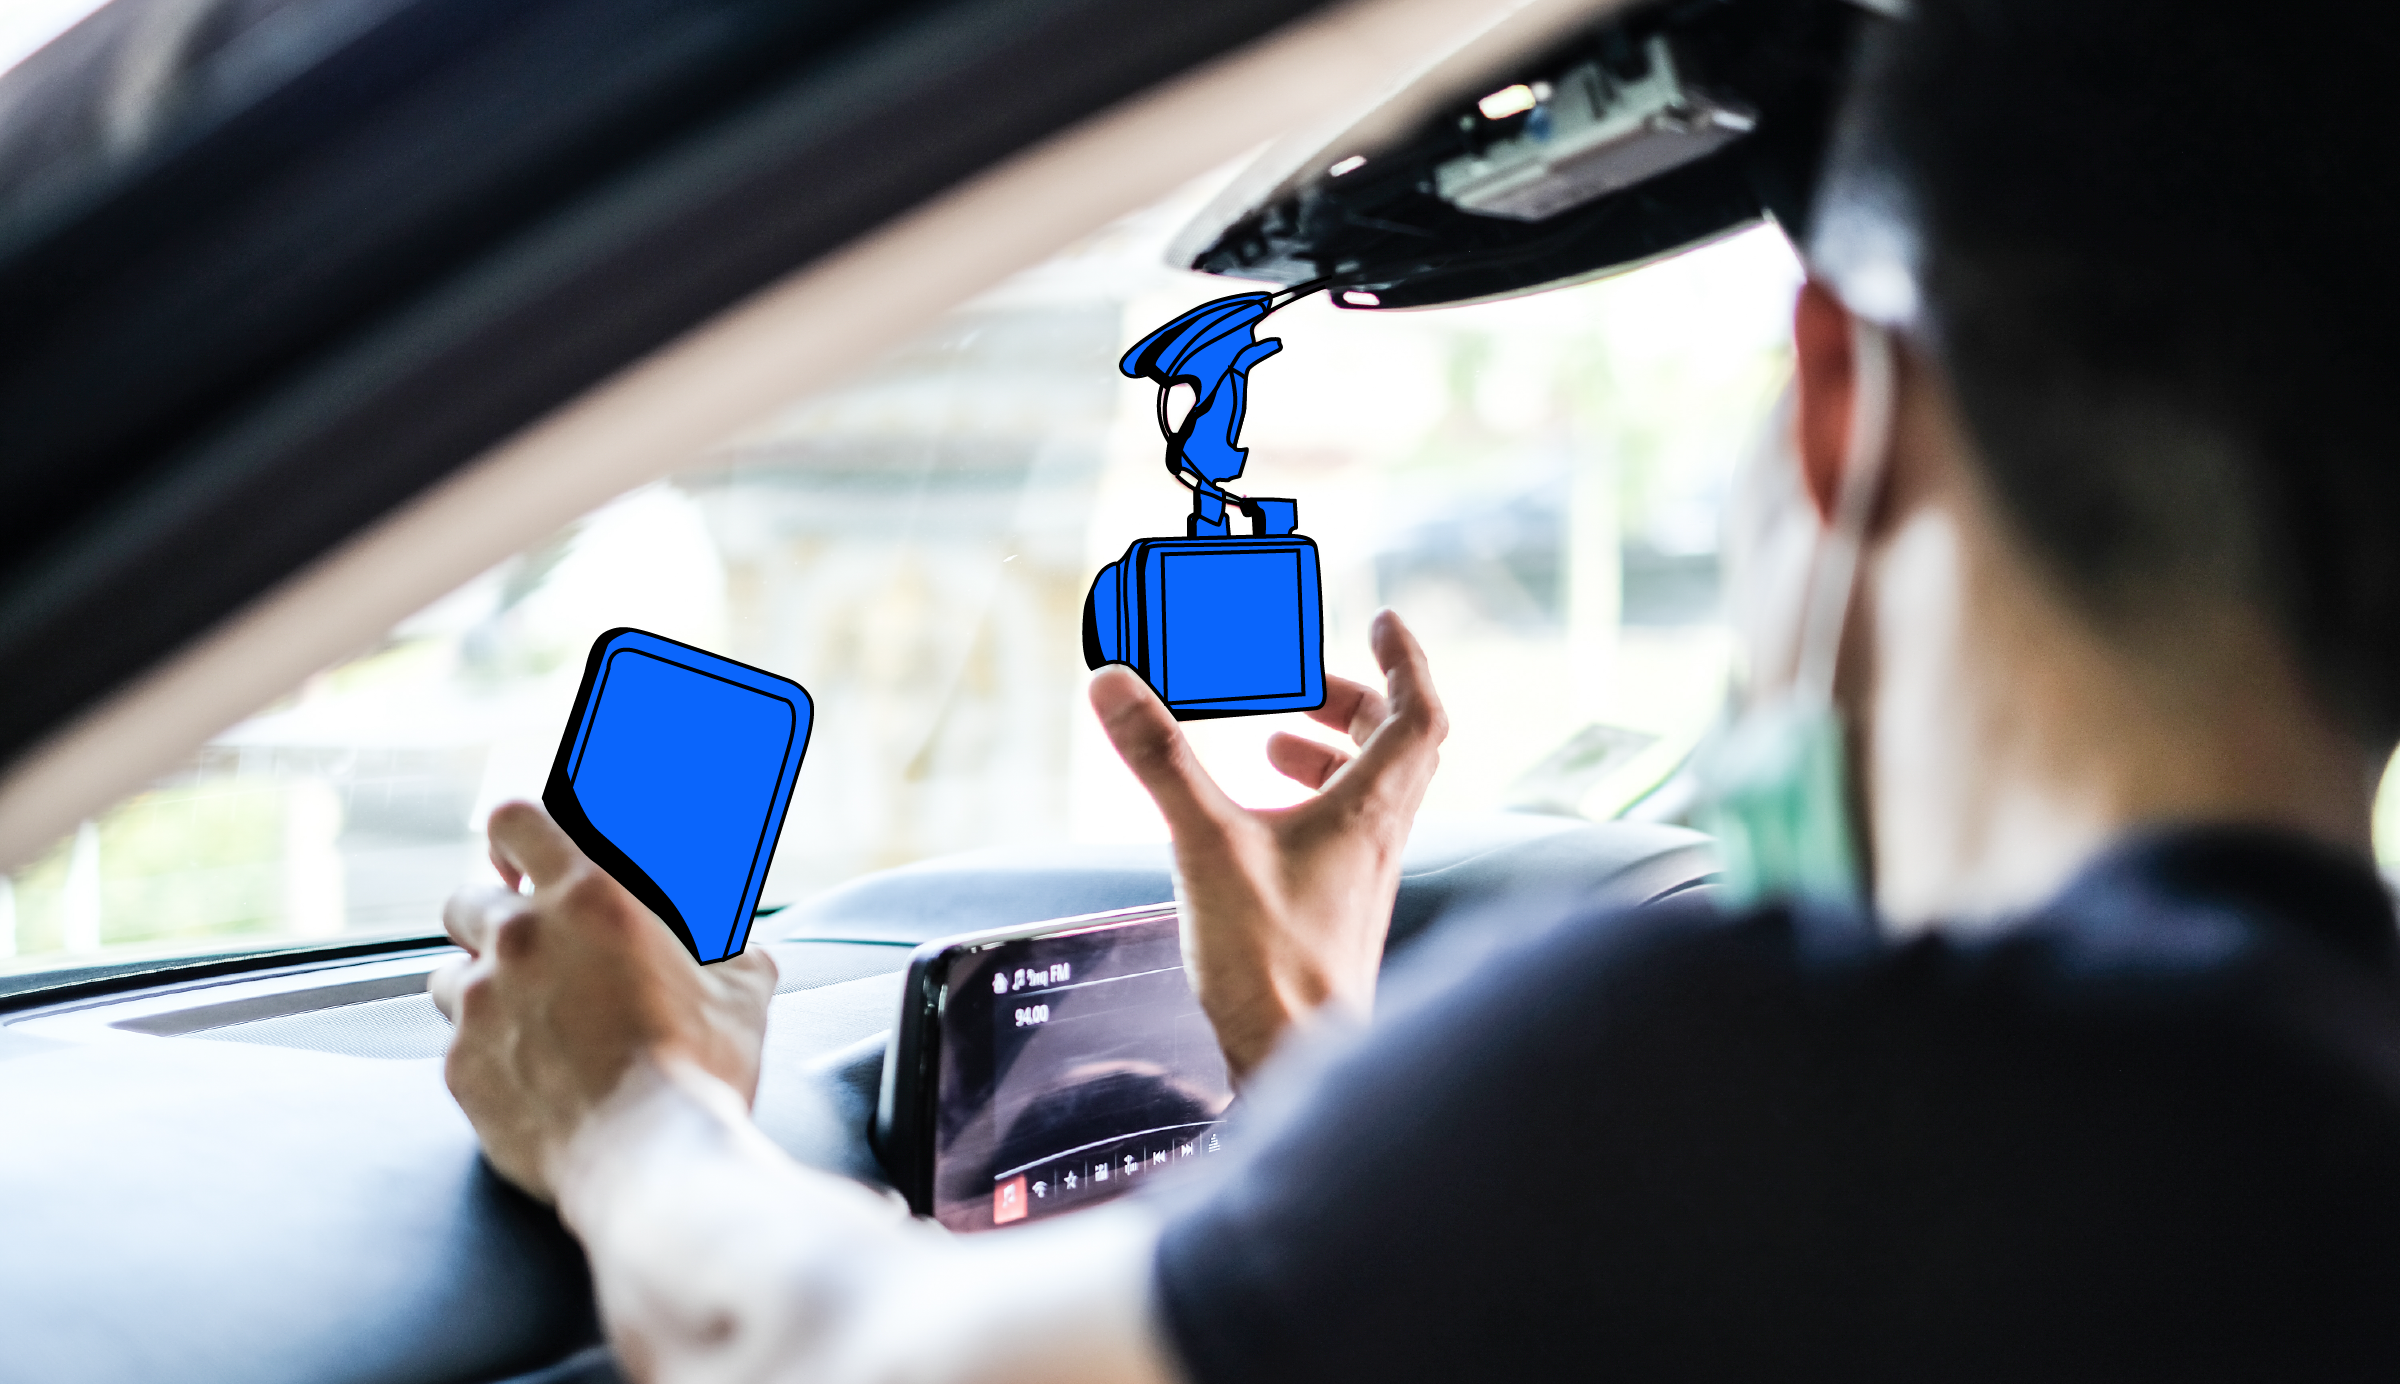 Professional installing a dash cam in a car's interior near the rear-view mirror.